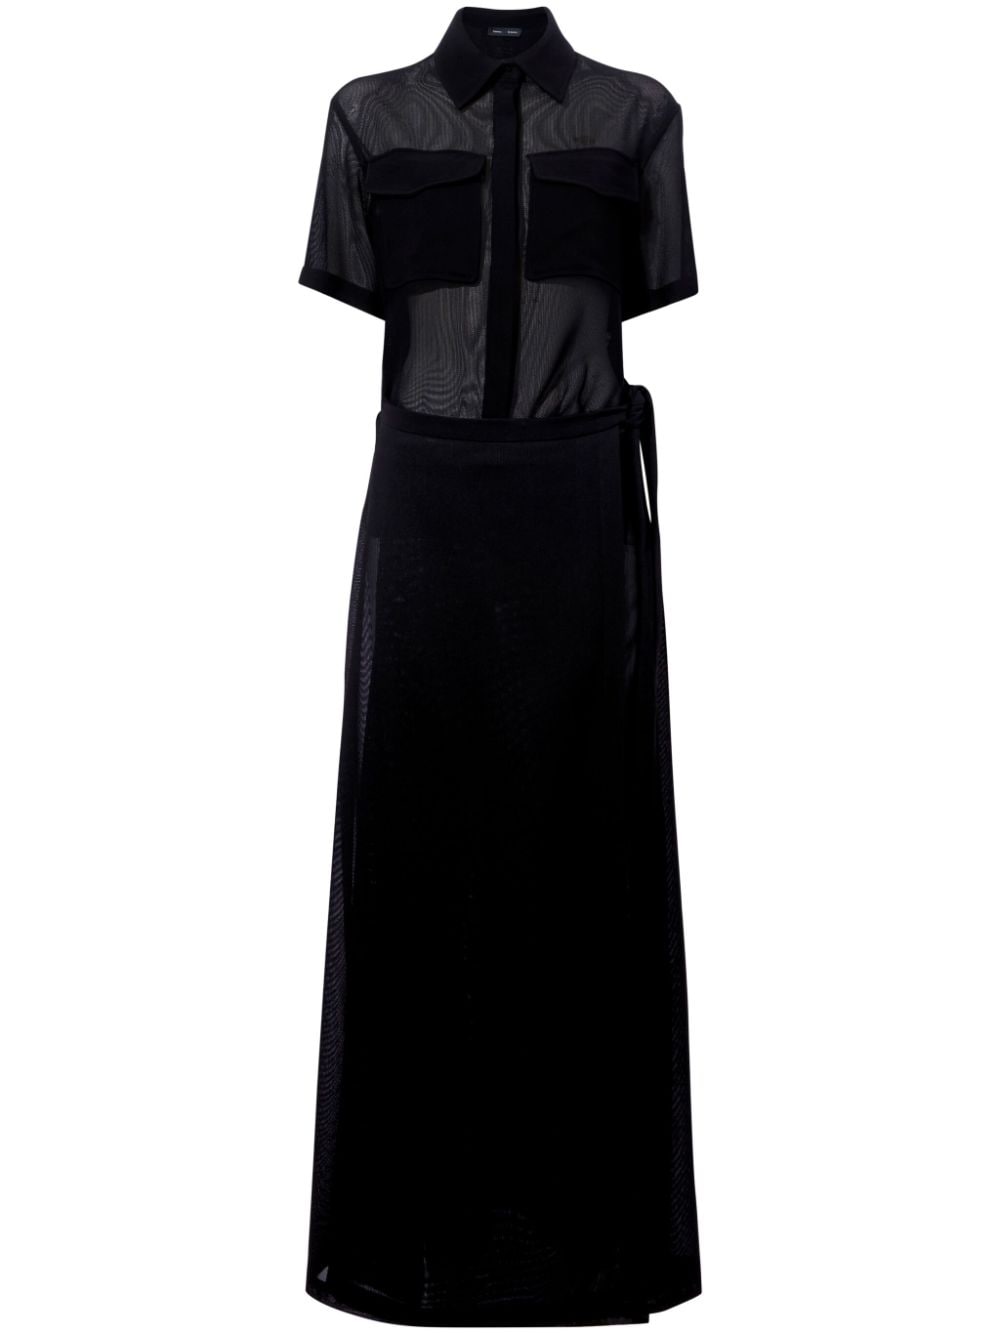 Proenza Schouler Emory Semi-sheer Dress In Black